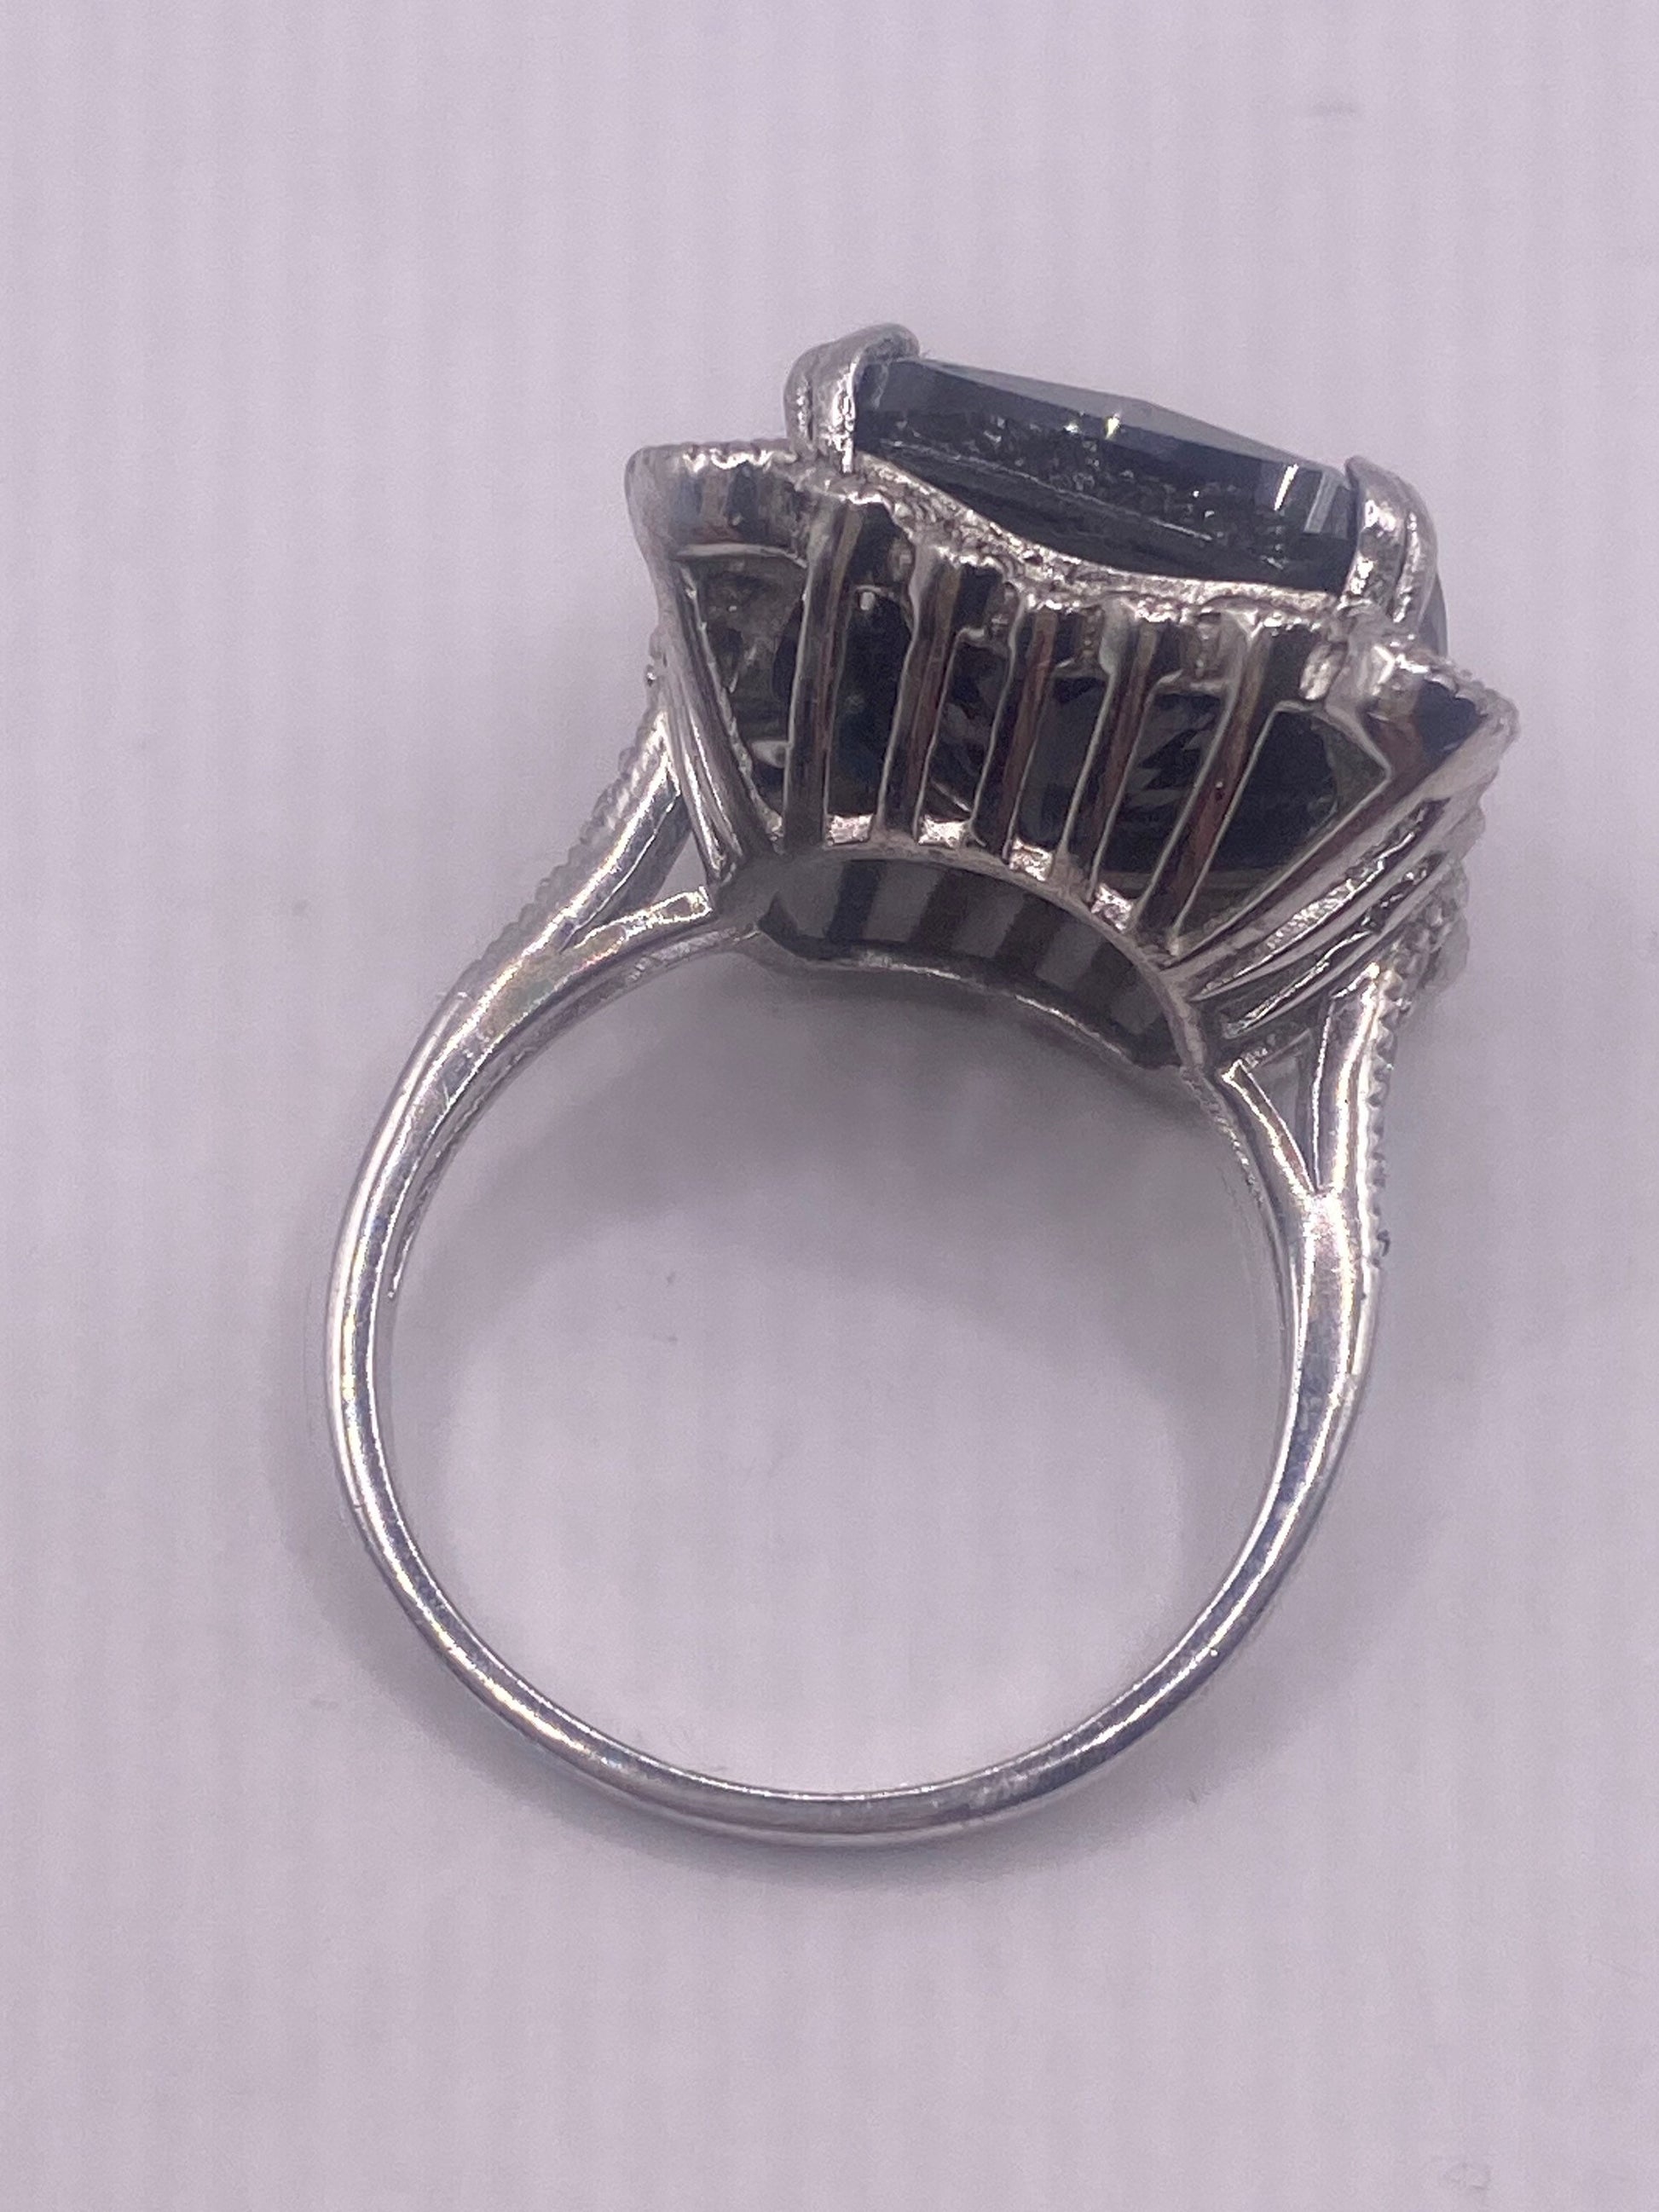 Vintage Black Jet Cubic Zirconia Crystal Sterling Silver Cocktail Ring Size 9.25